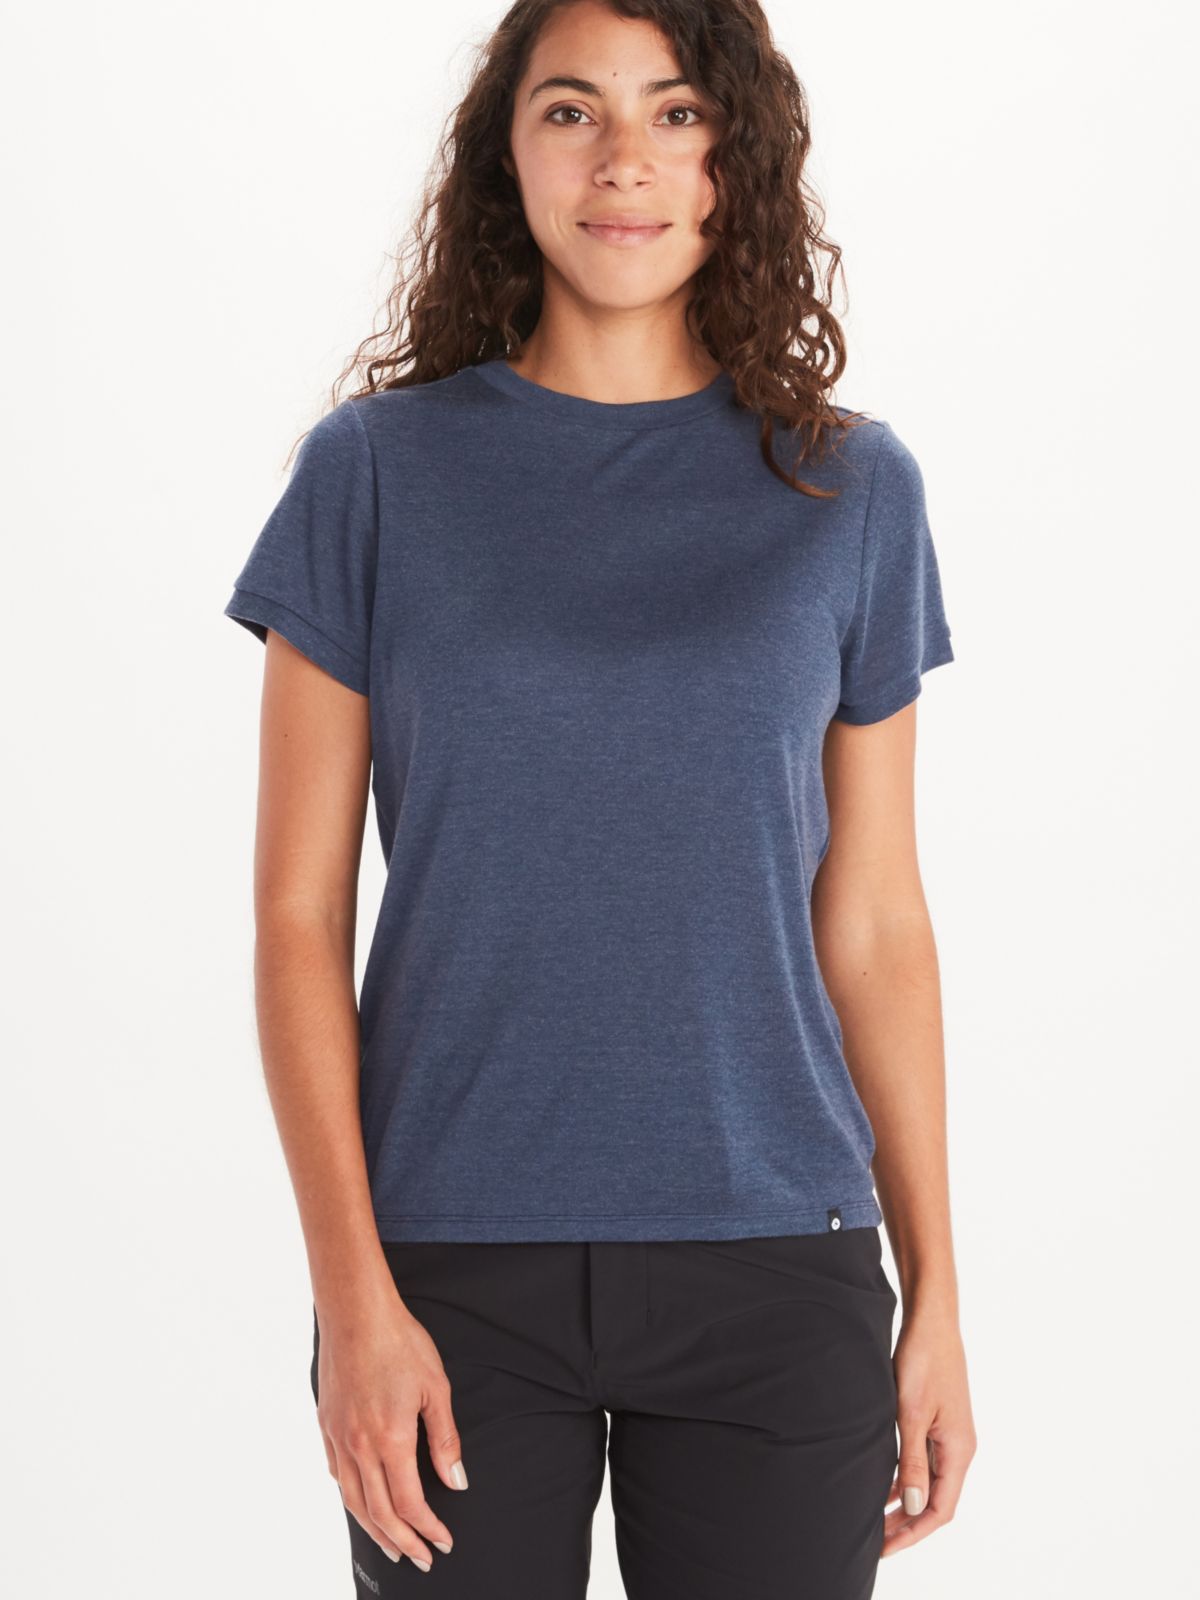 women's t-shirt on woman